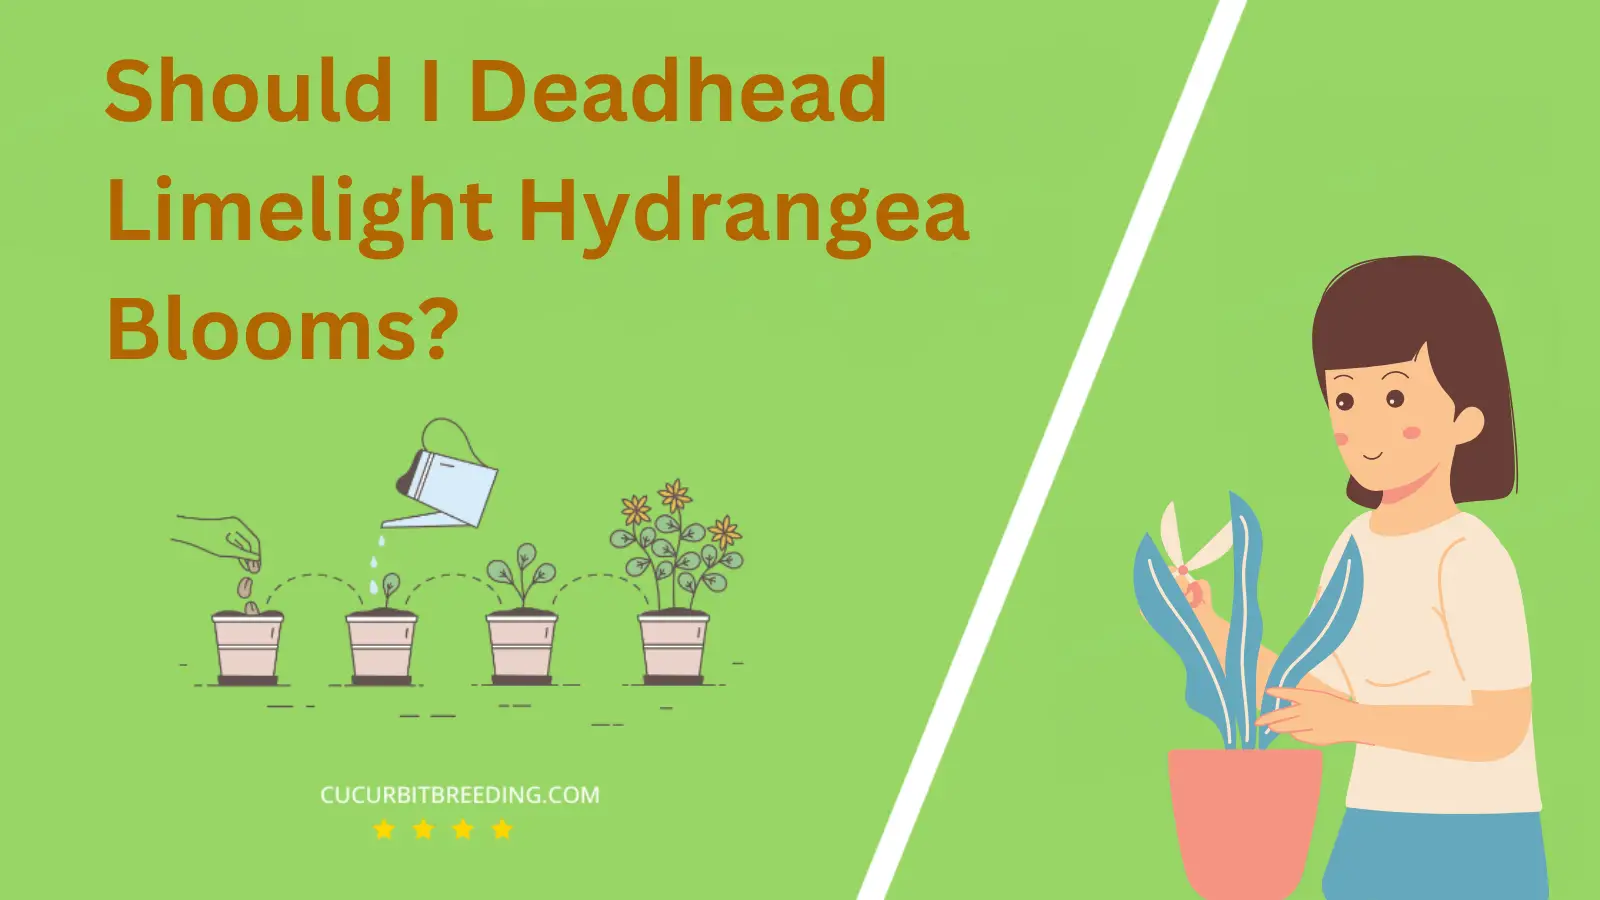 Should I Deadhead Limelight Hydrangea Blooms?